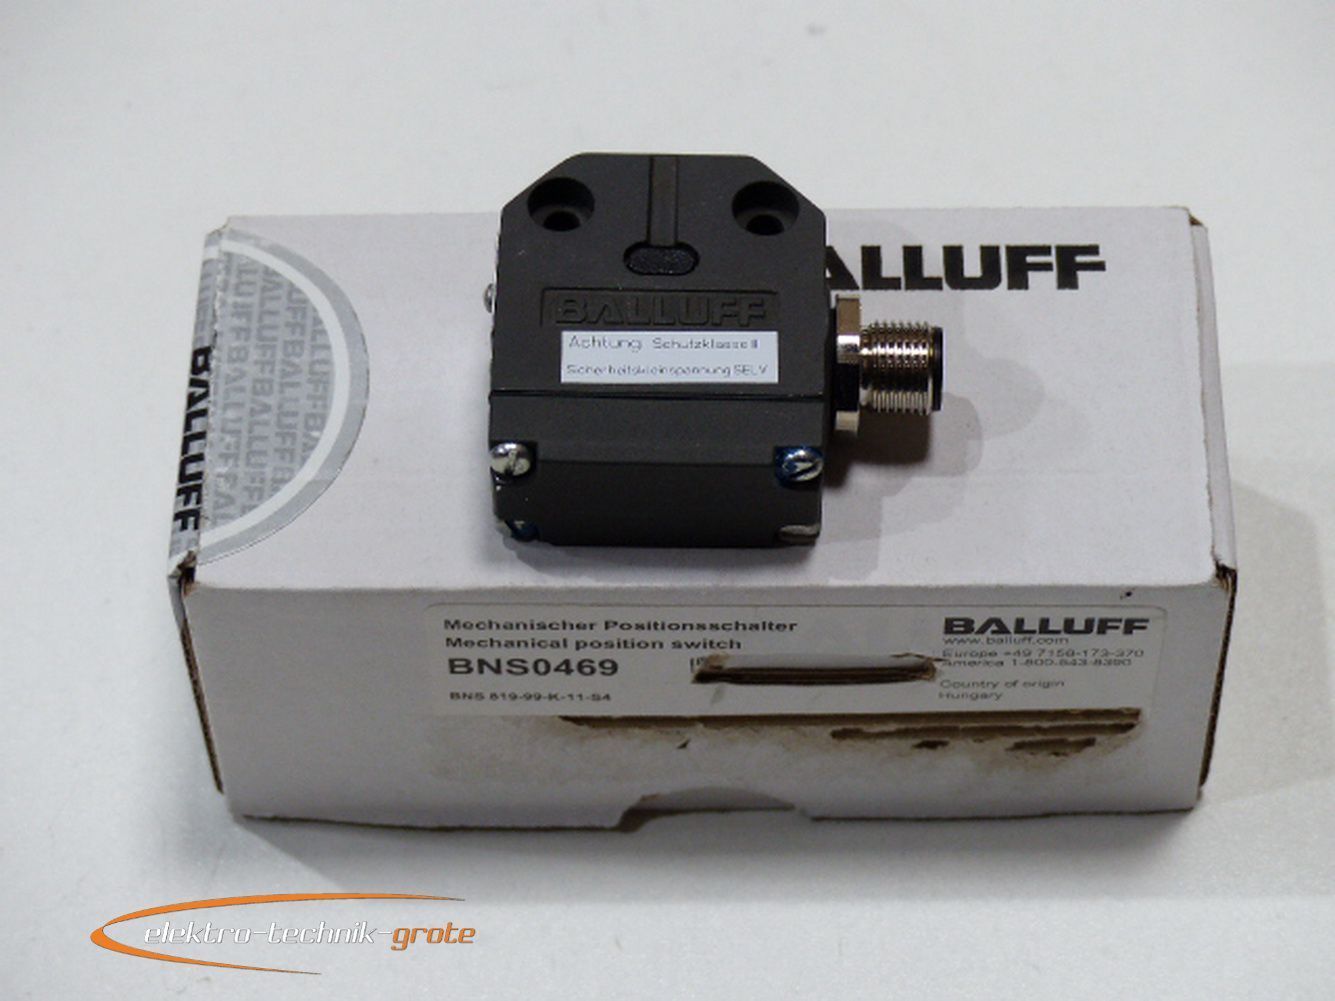 Balluff BNS0469 Mechanischer Positionsschalter BNS 819-99-K- 819-99-K-11,巴鲁夫,PLC